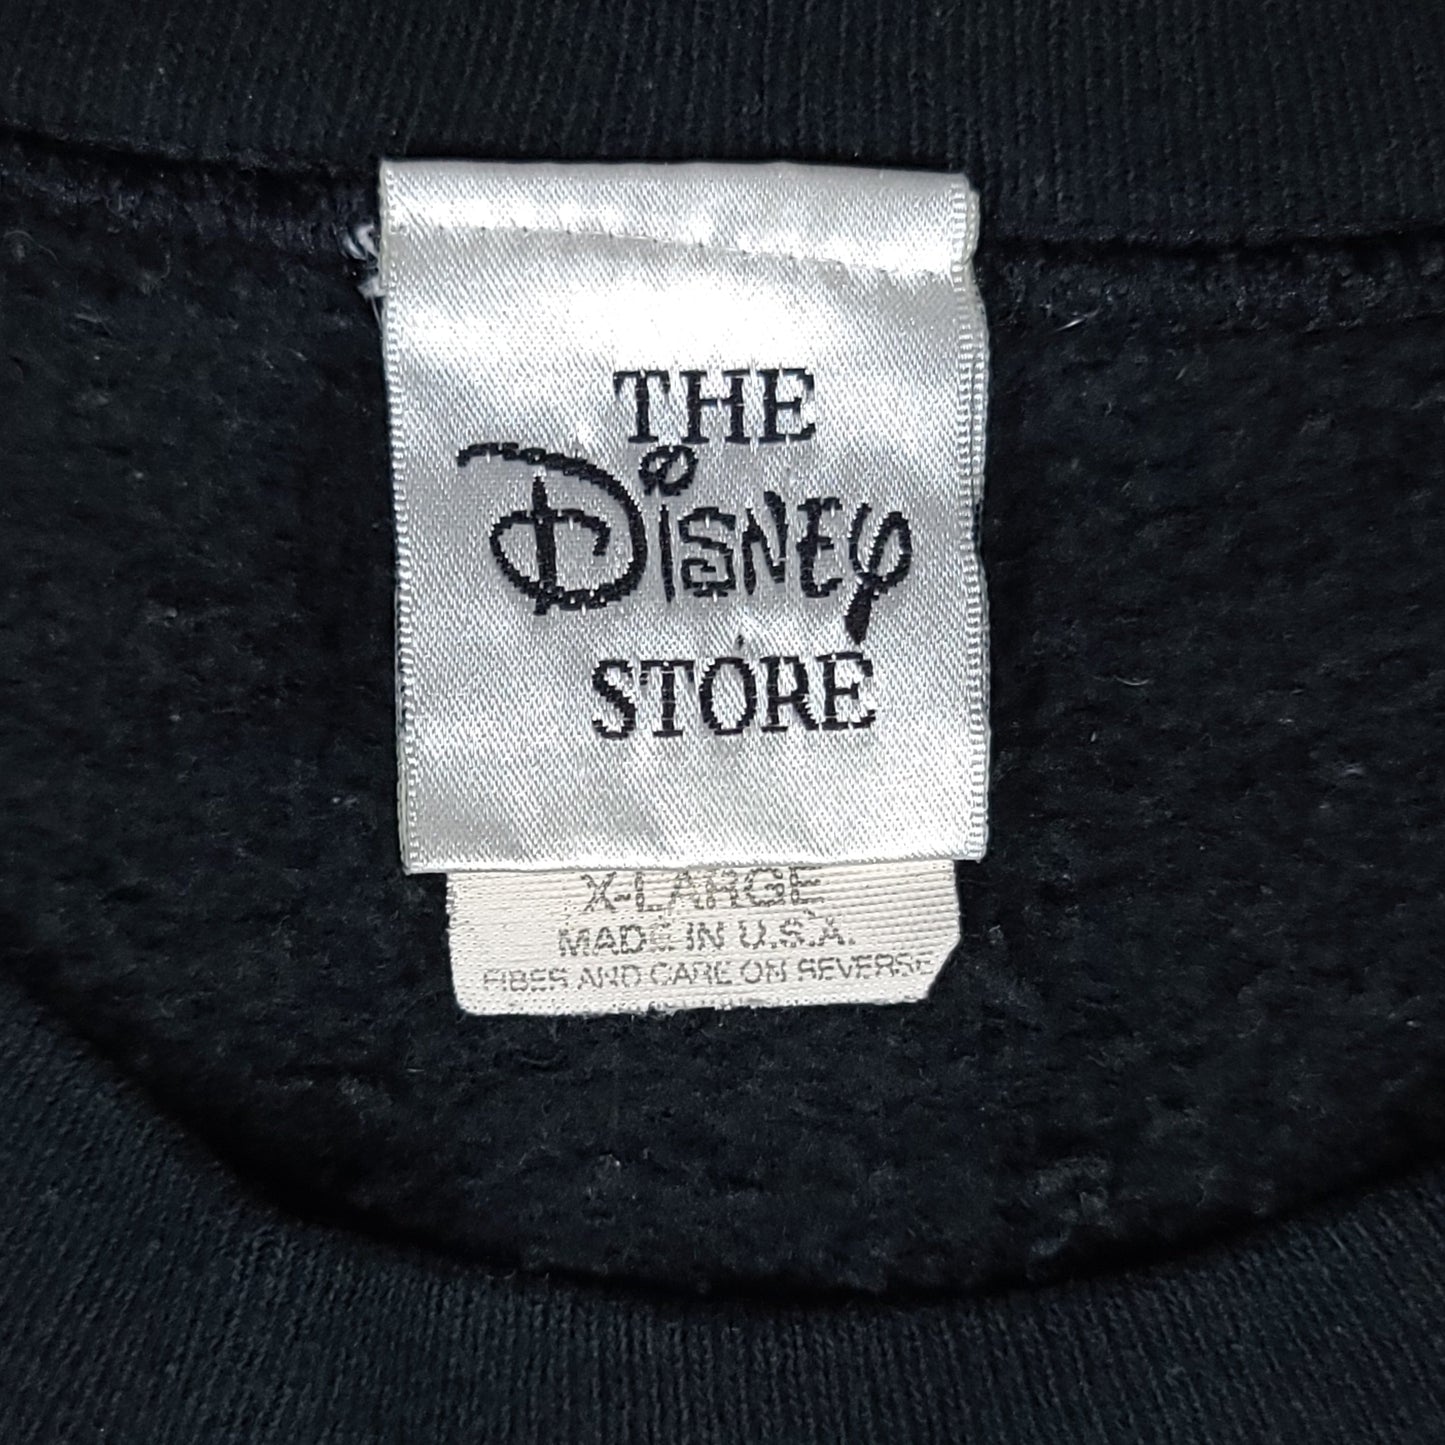 Vintage The DIsney Store Mickey Mouse Atlanta Black Sweatshirt